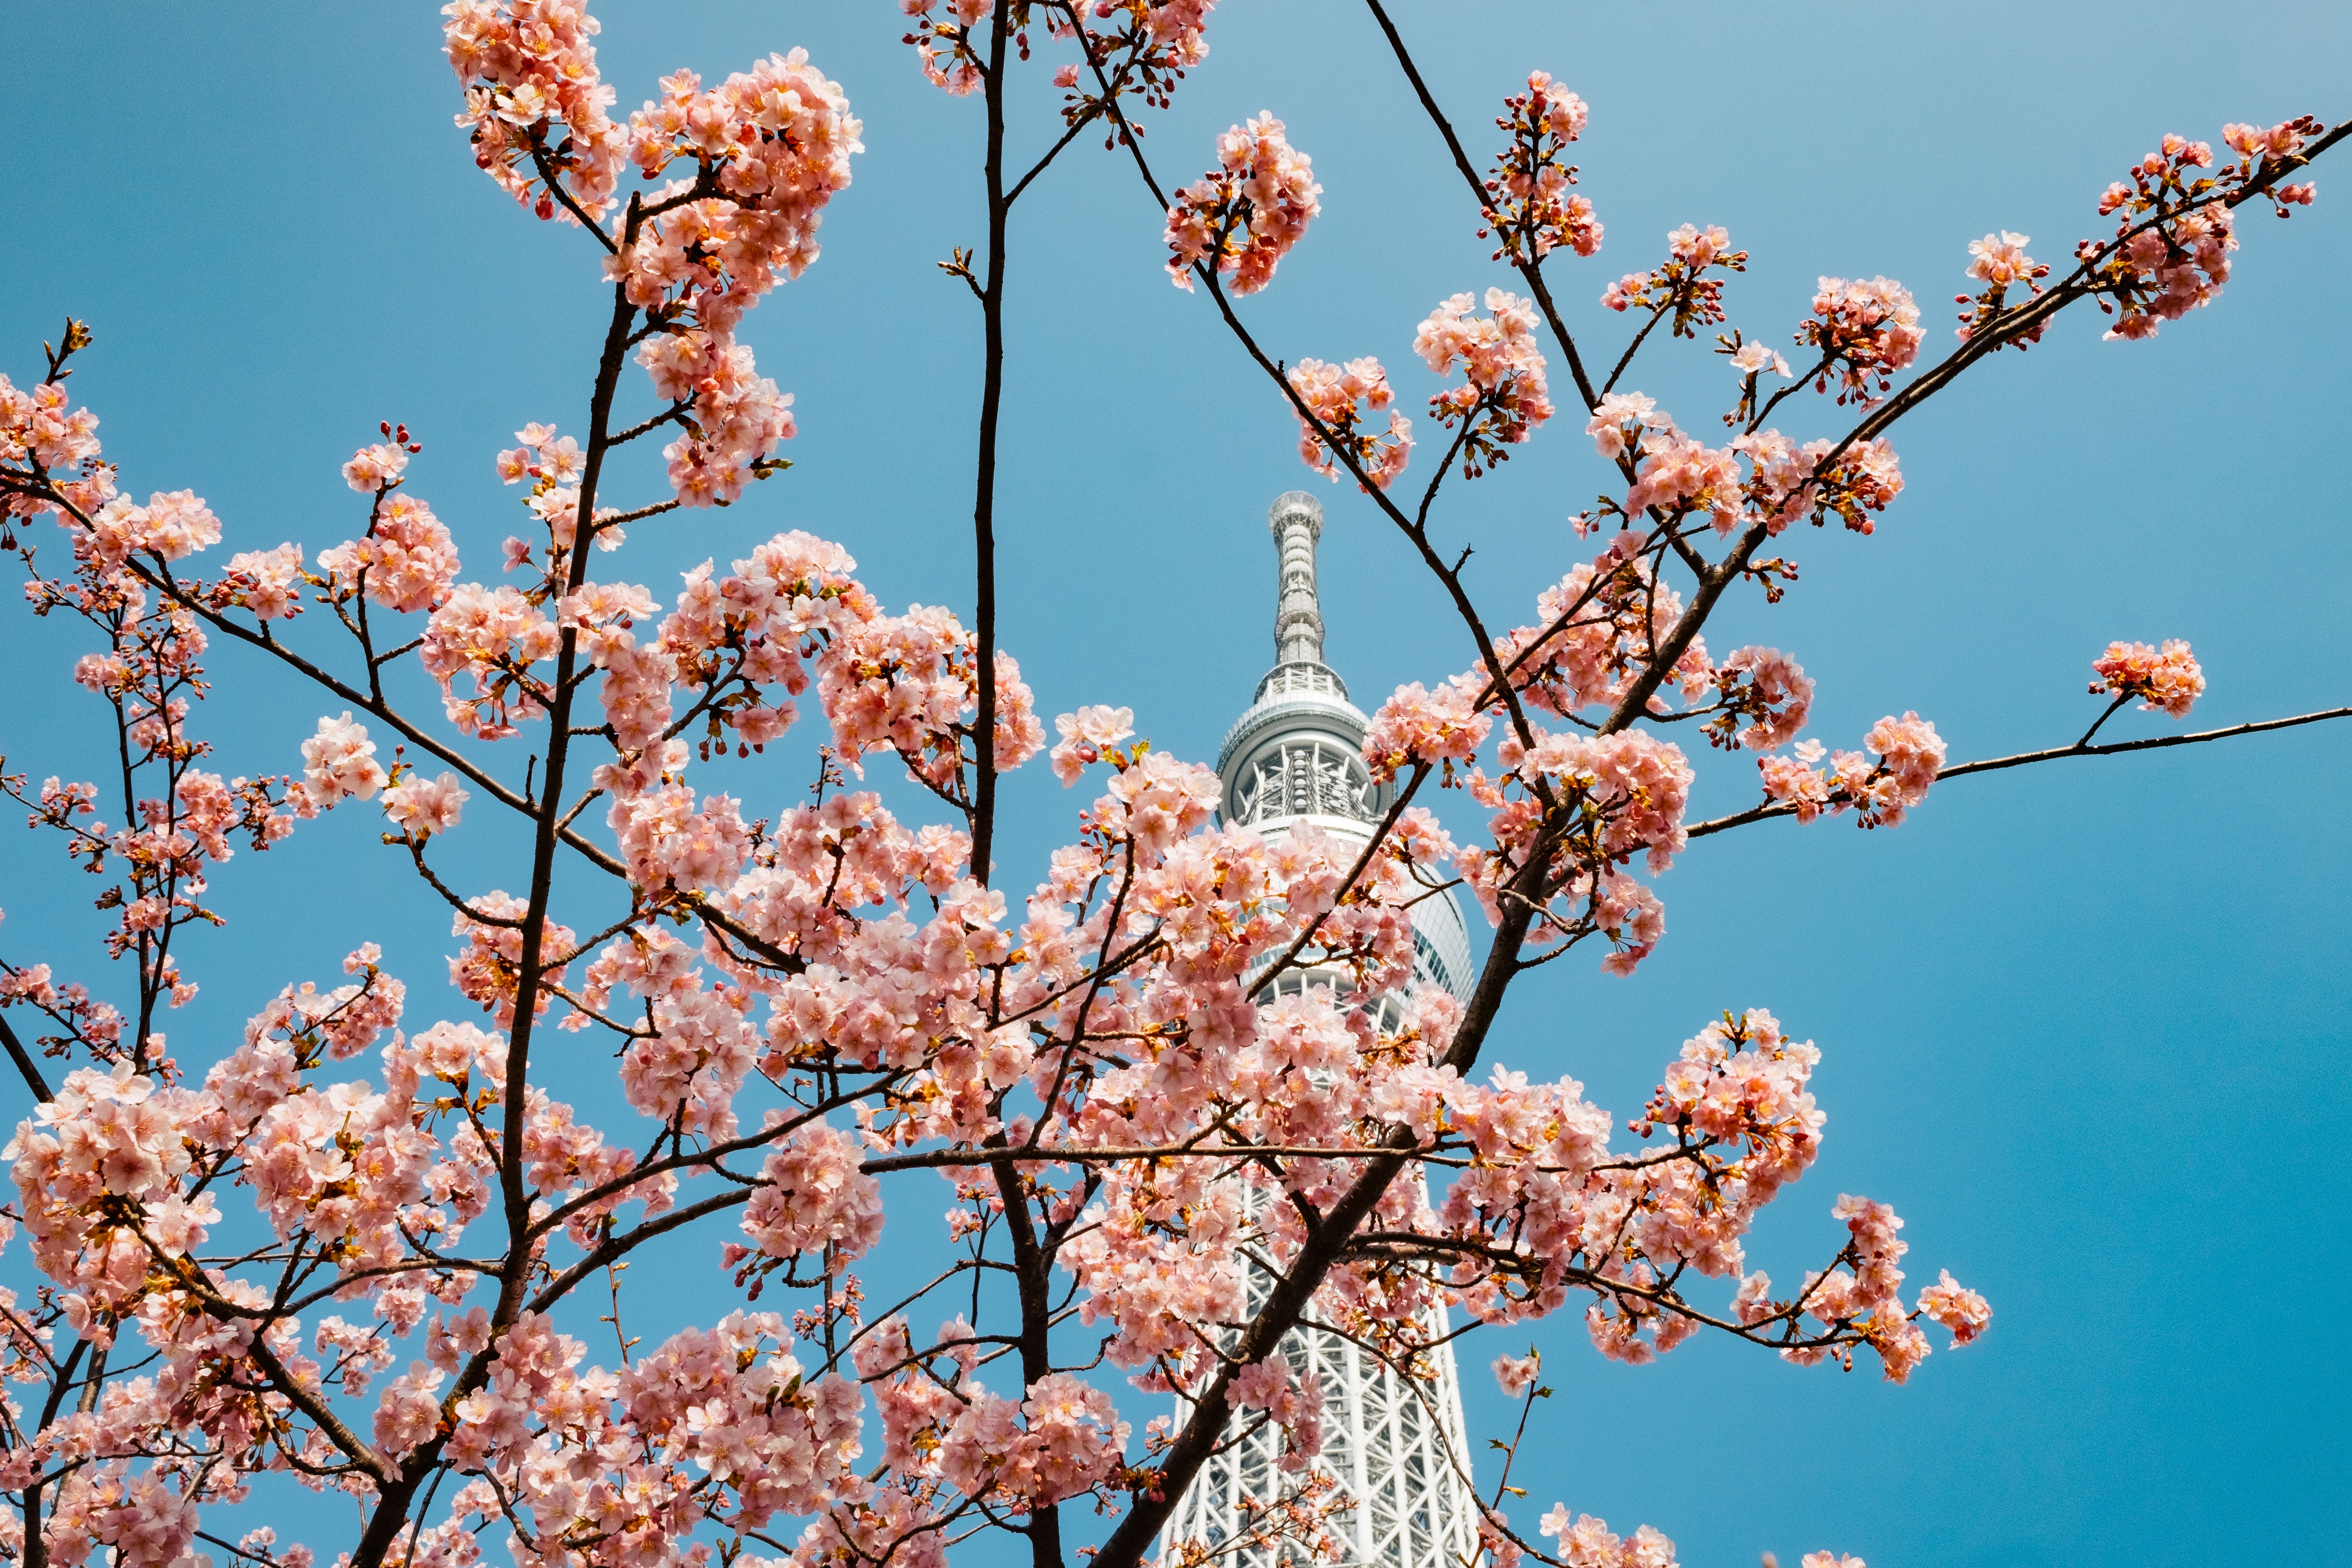 cherry blossom tree near white concrete building under blue sky during daytime